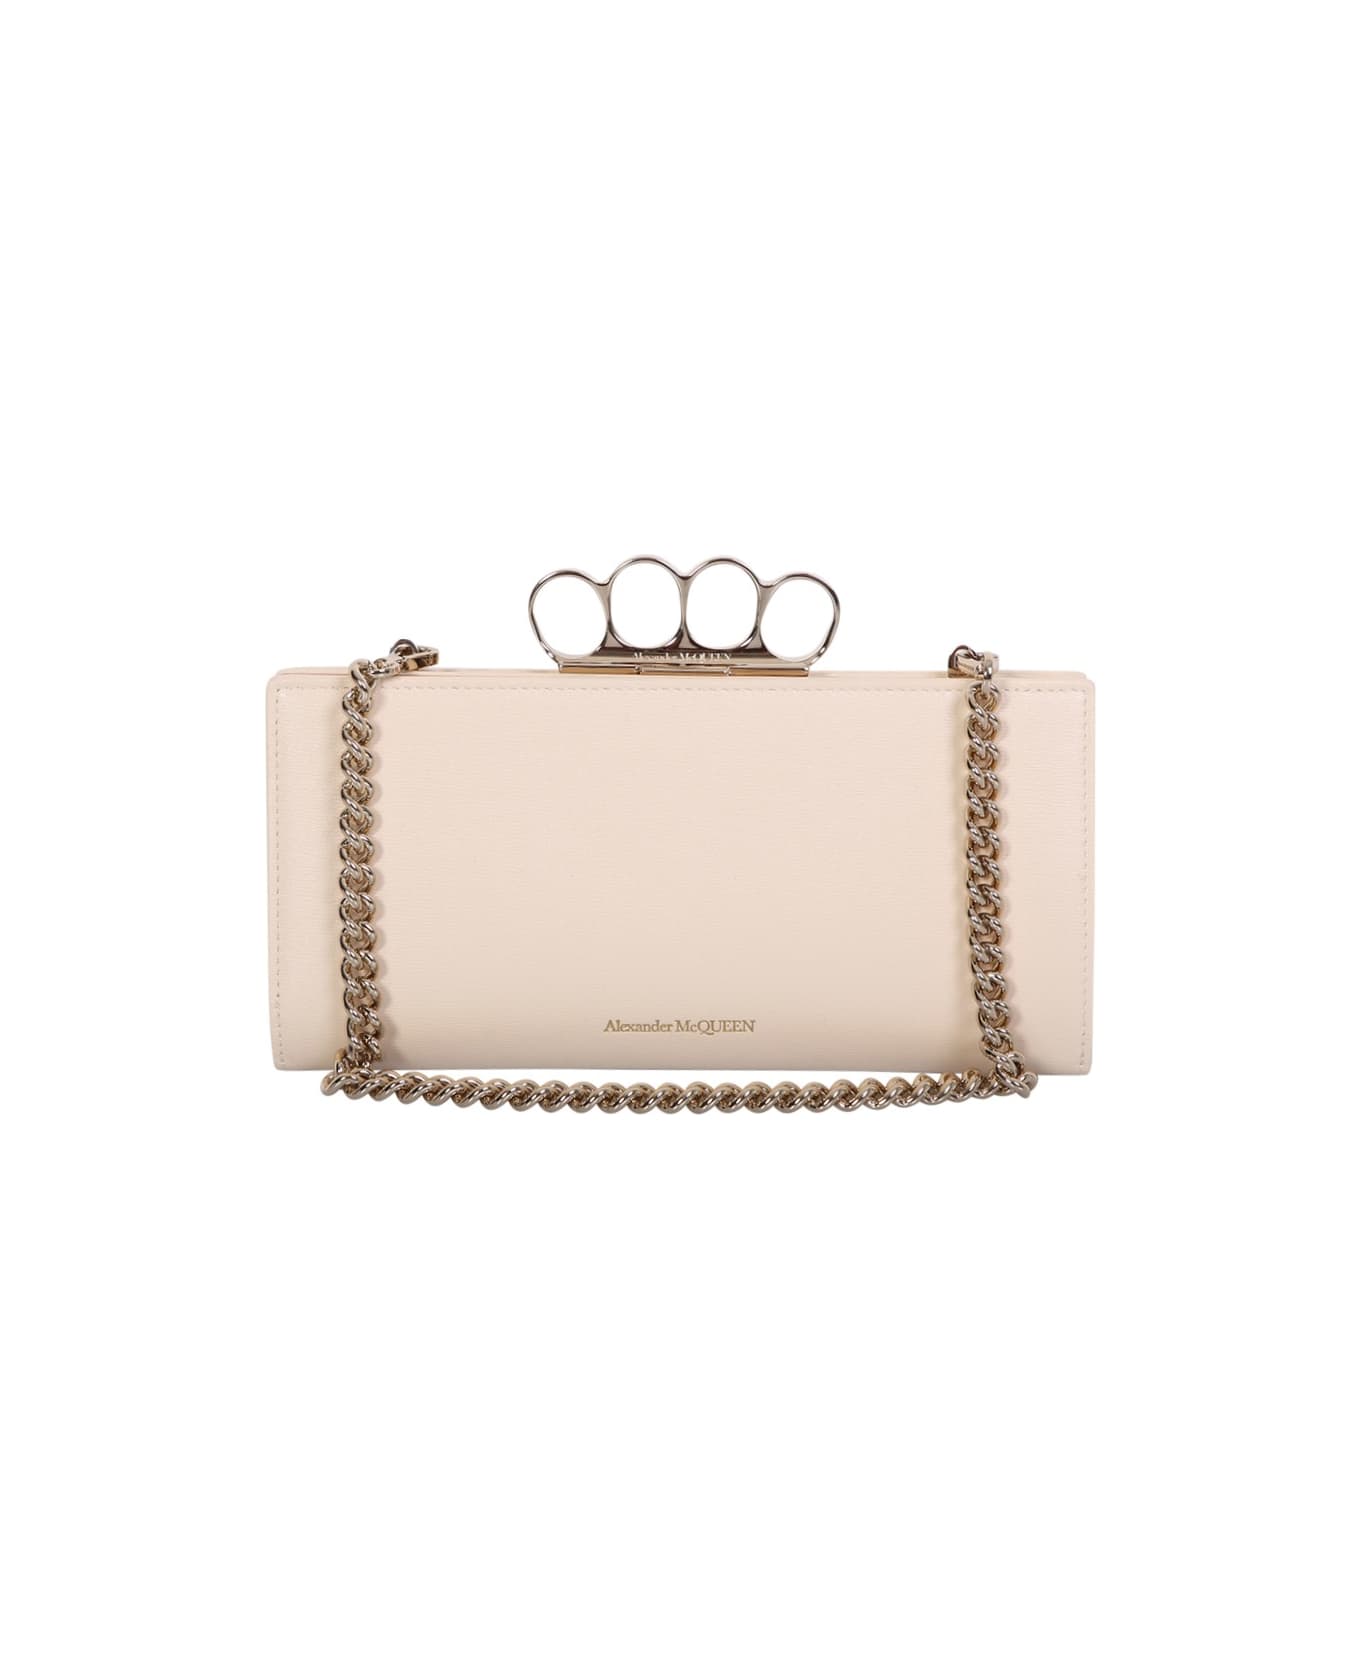 Alexander McQueen Four Ring Case Chain Shoulder Bag - Beige